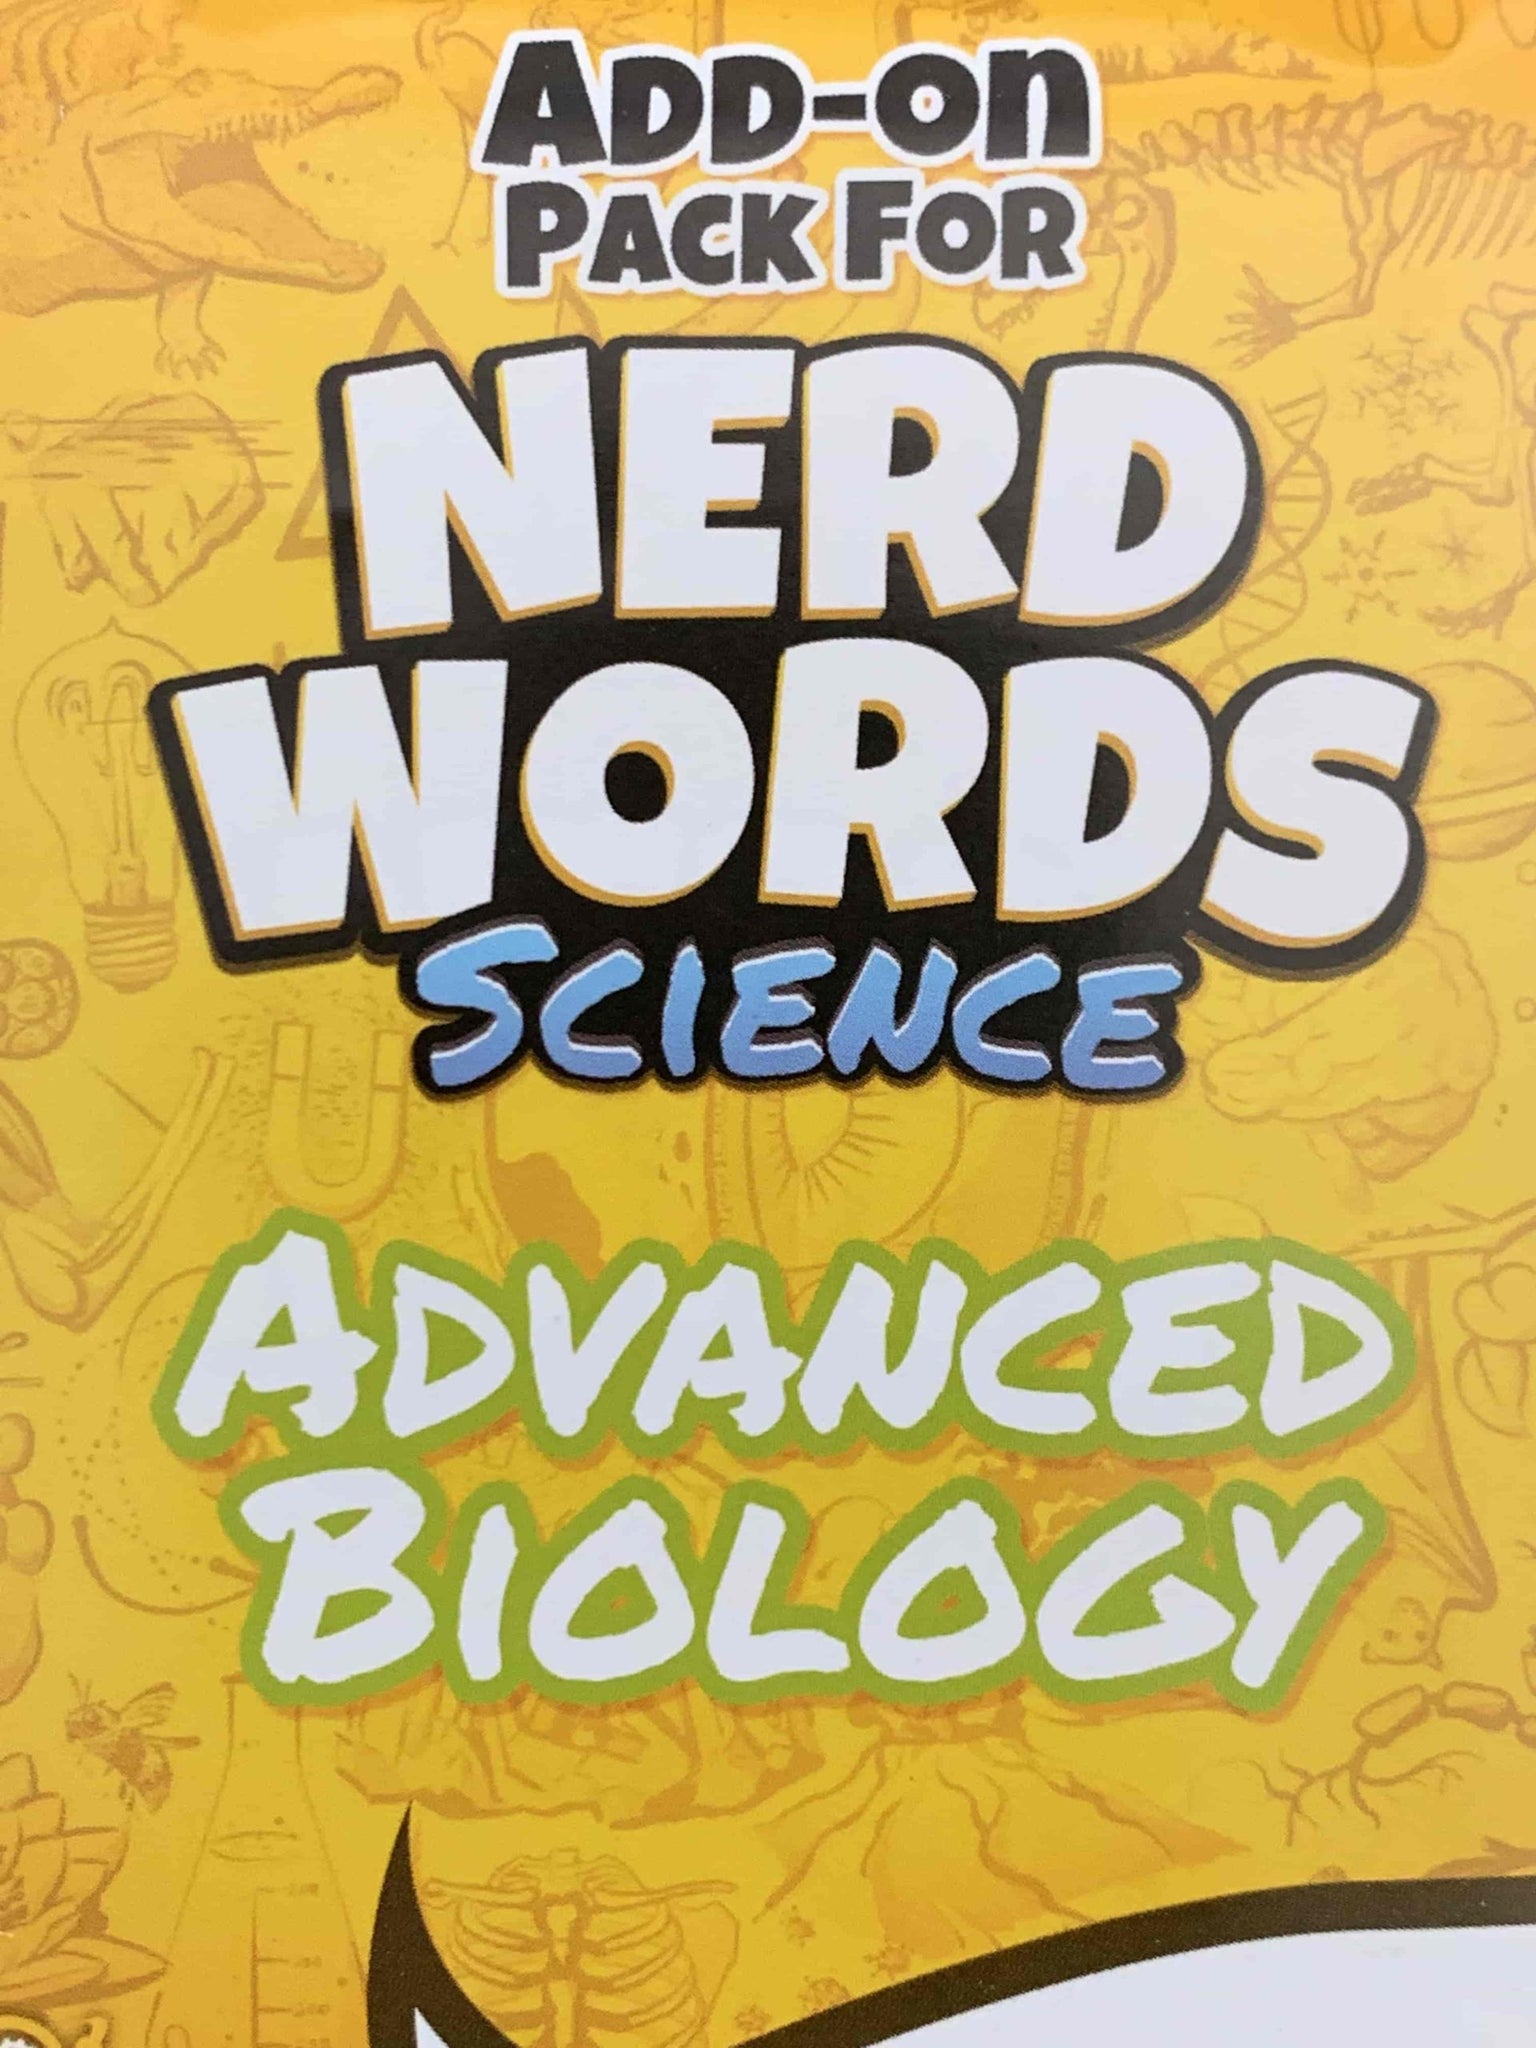 Nerd Words: Science - Advanced Biology